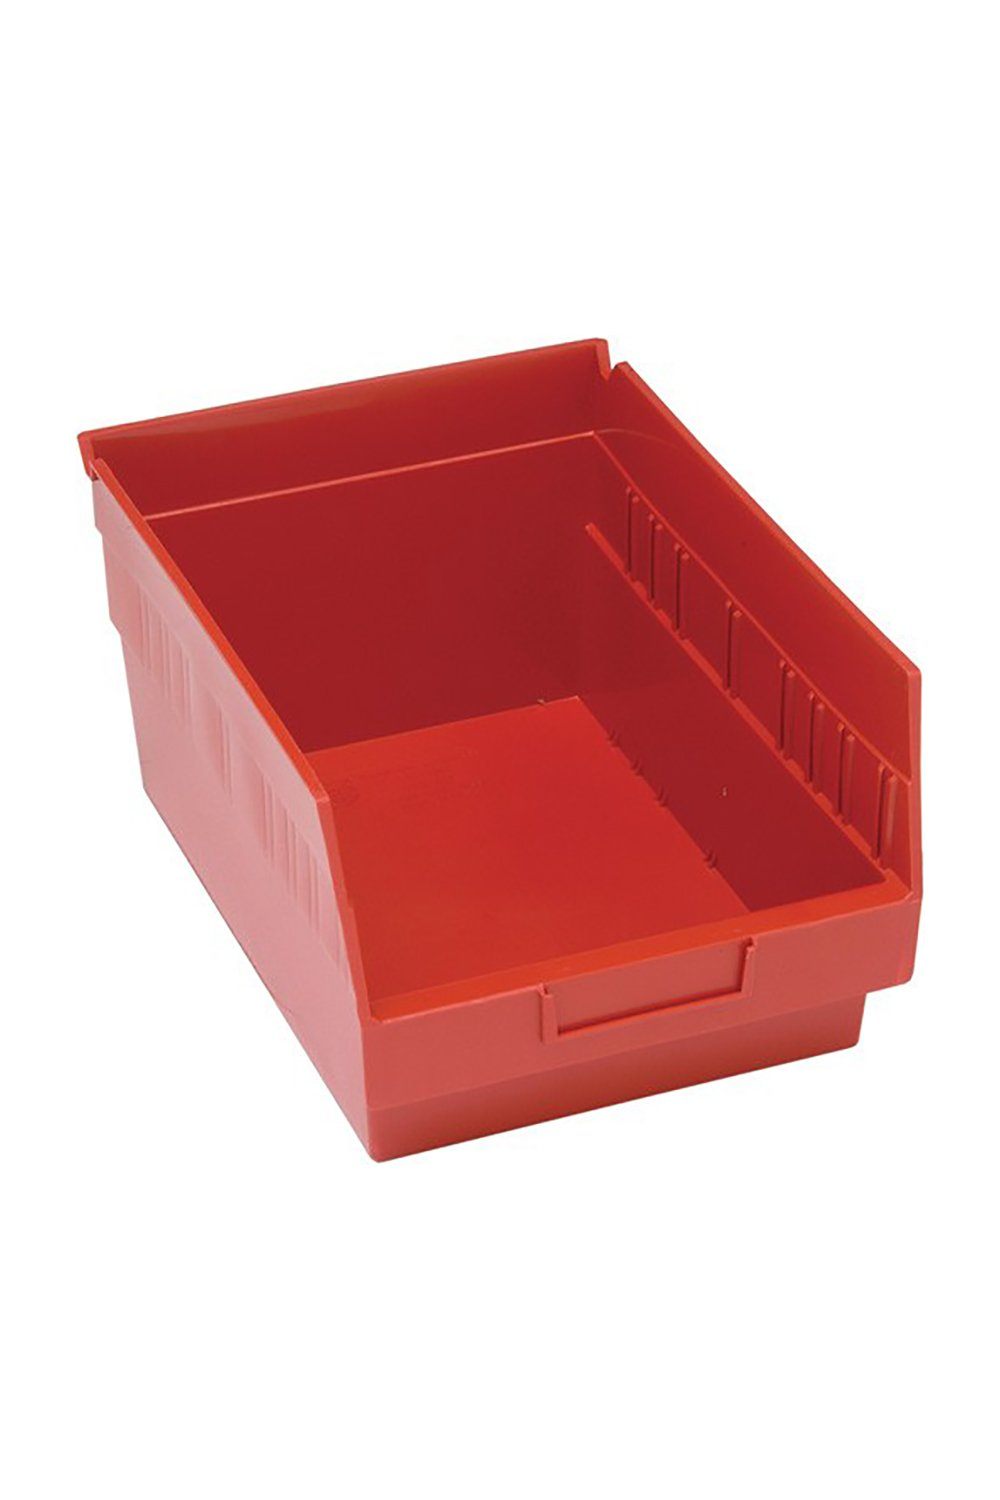 Shelf Bin for 12"D Shelves Bins & Containers Acart 11-5/8'' x 8-3/8'' x 6'' Red 